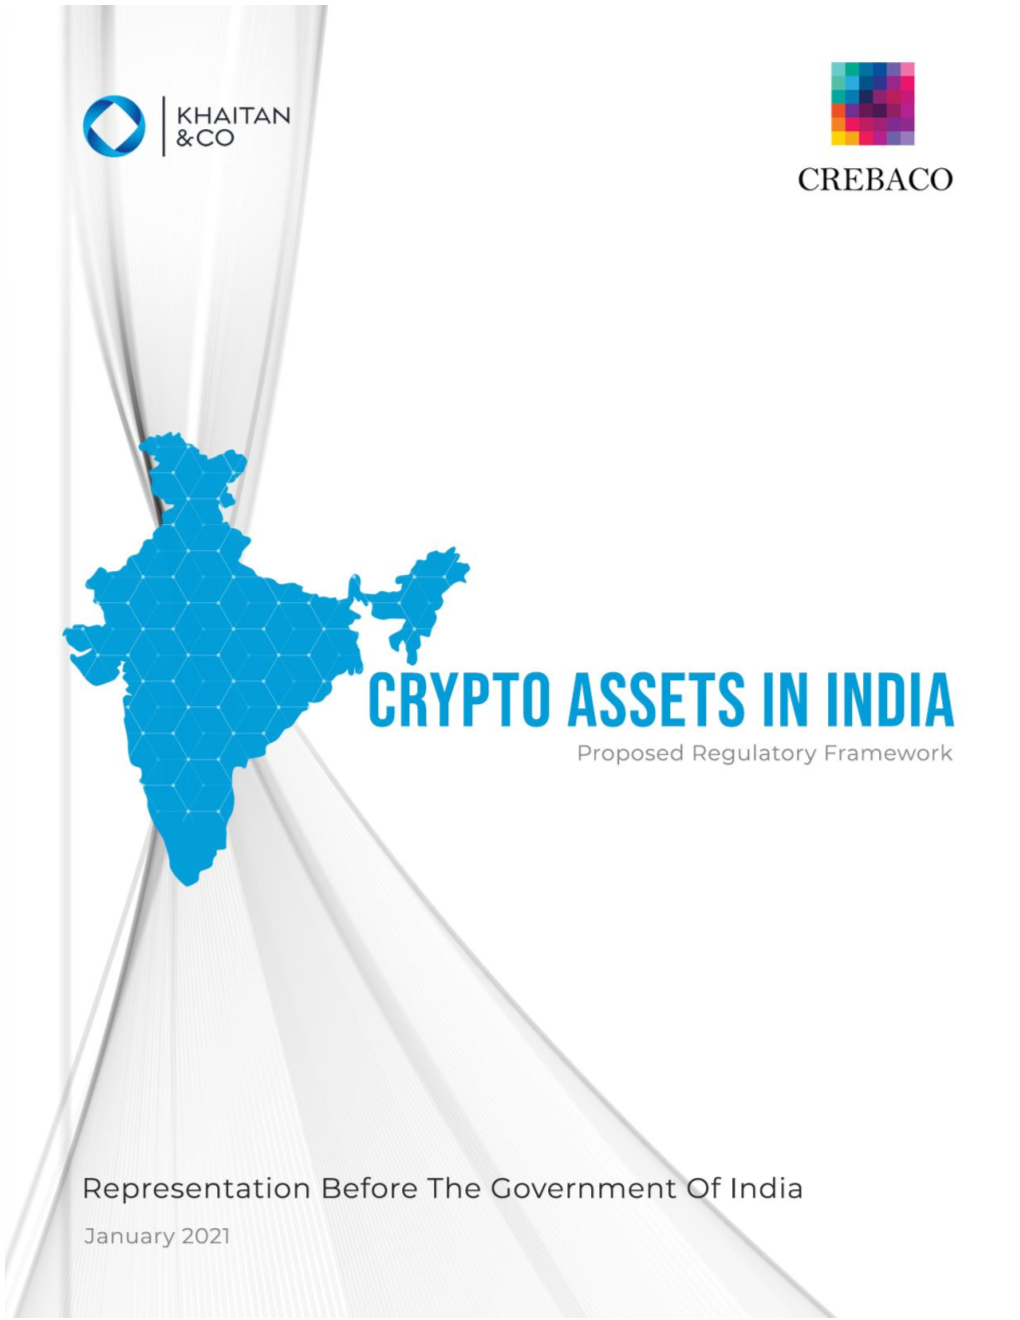 Representation Proposed Regulatory Framework for Crypto Assets